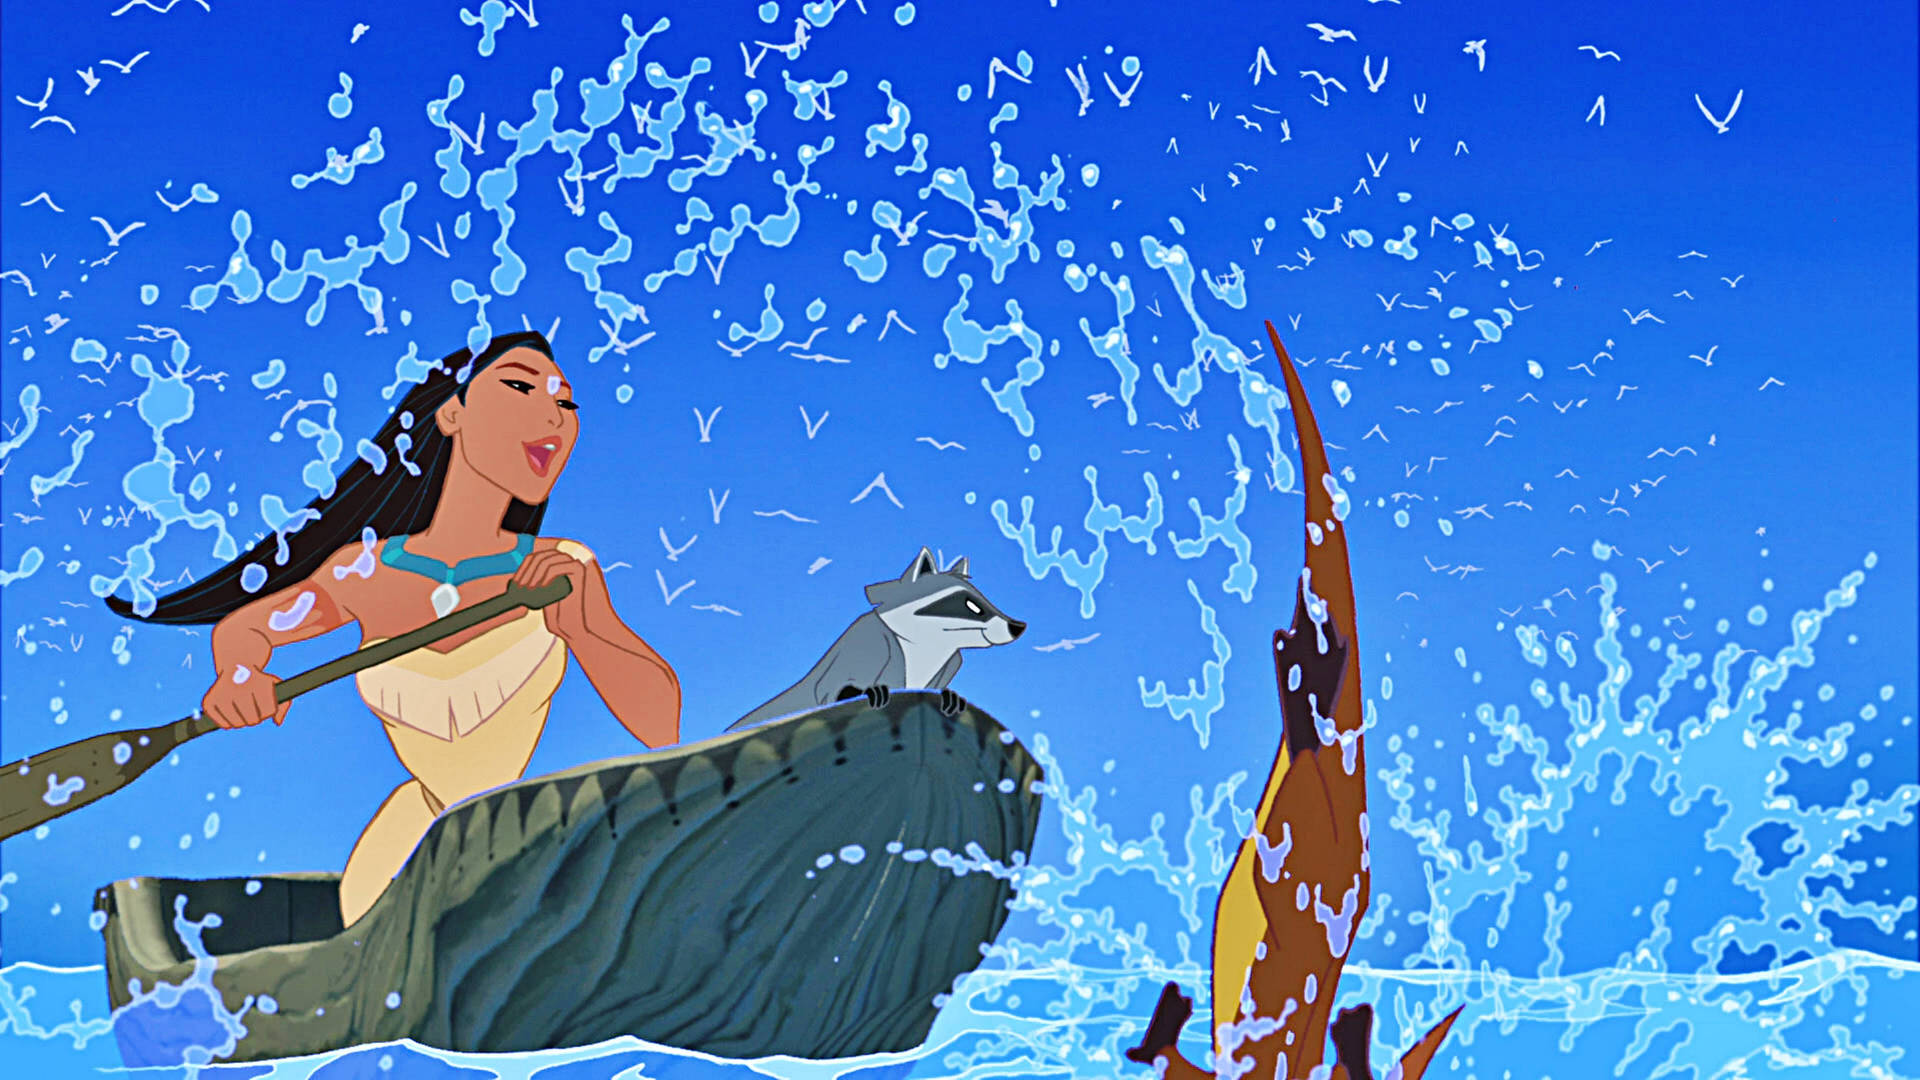 Pocahontas Boating With Meeko Wallpaper